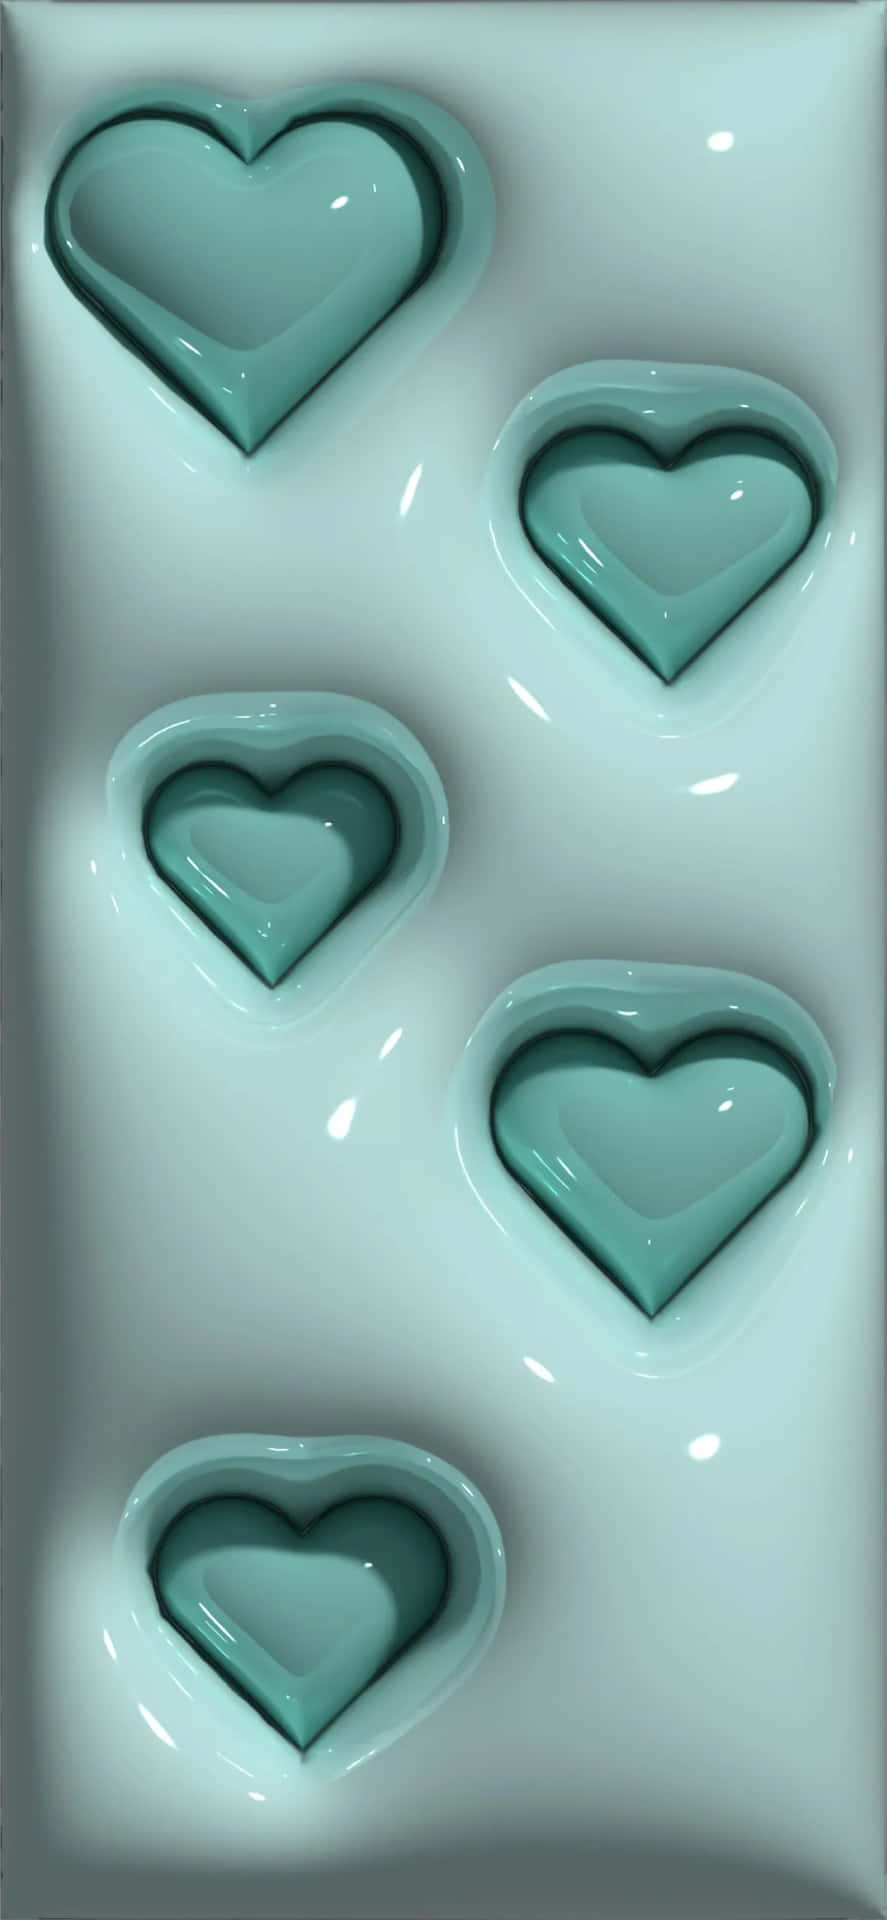 3 D Heart Shaped Indentations Wallpaper